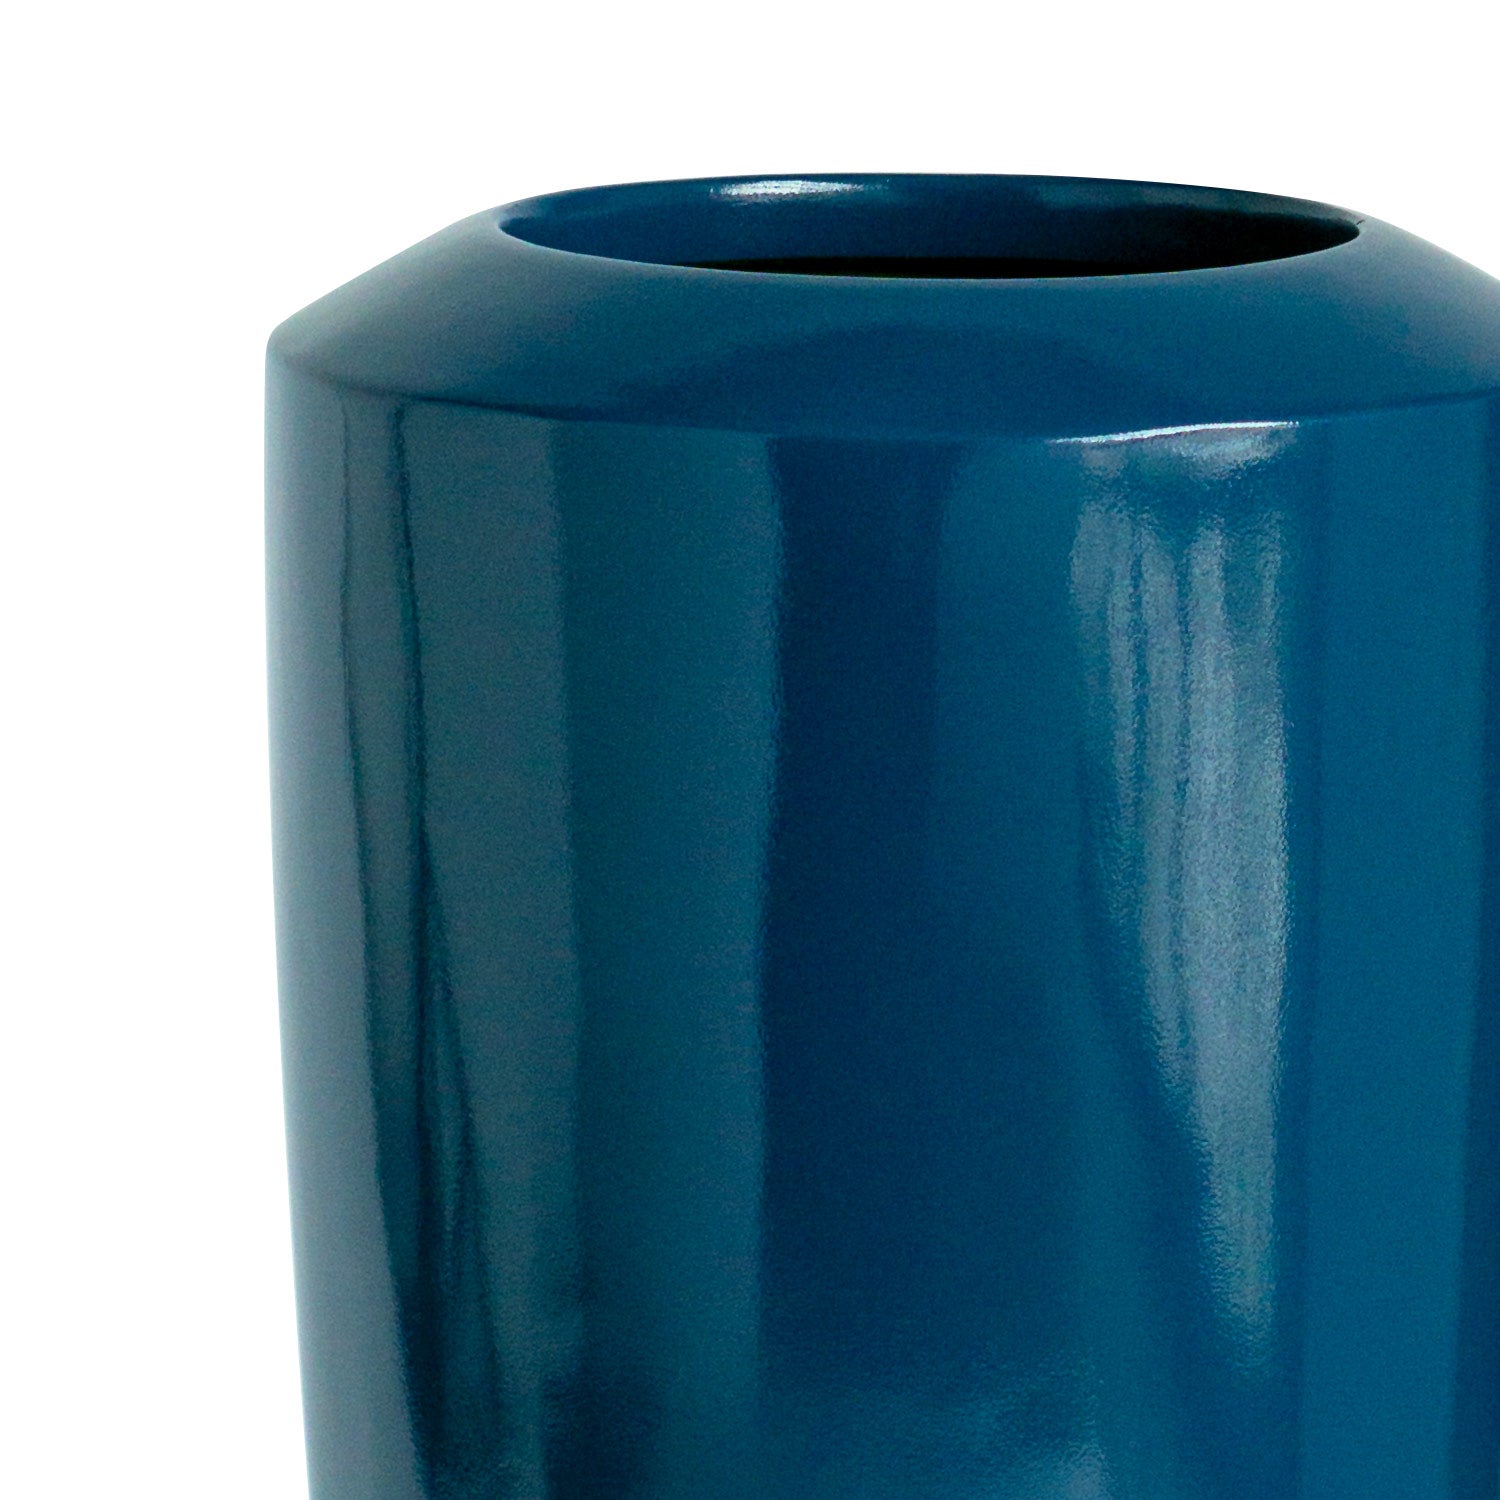 Close up of small fiberglass barrel on white background. Glossy blue finish.